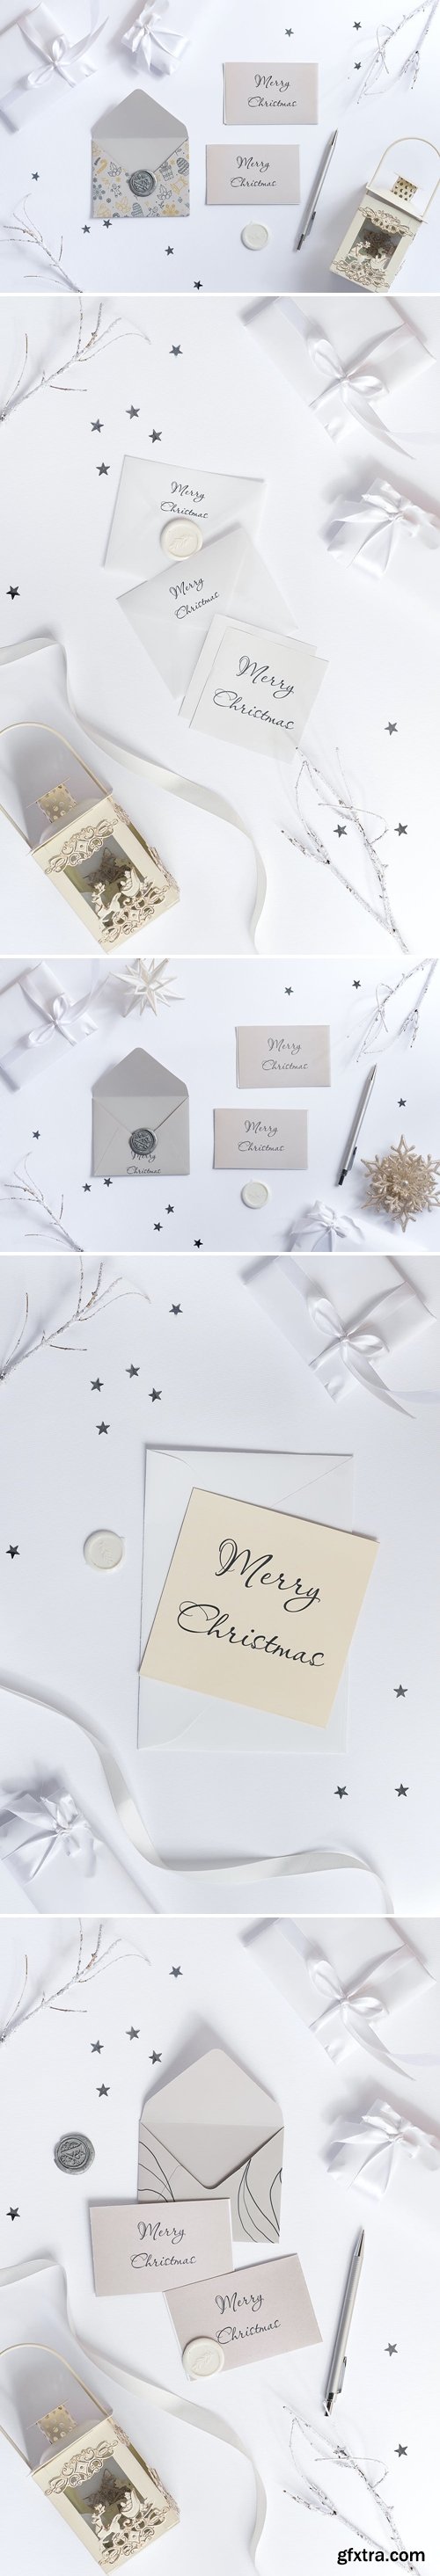 Christmas envelope and card mockup